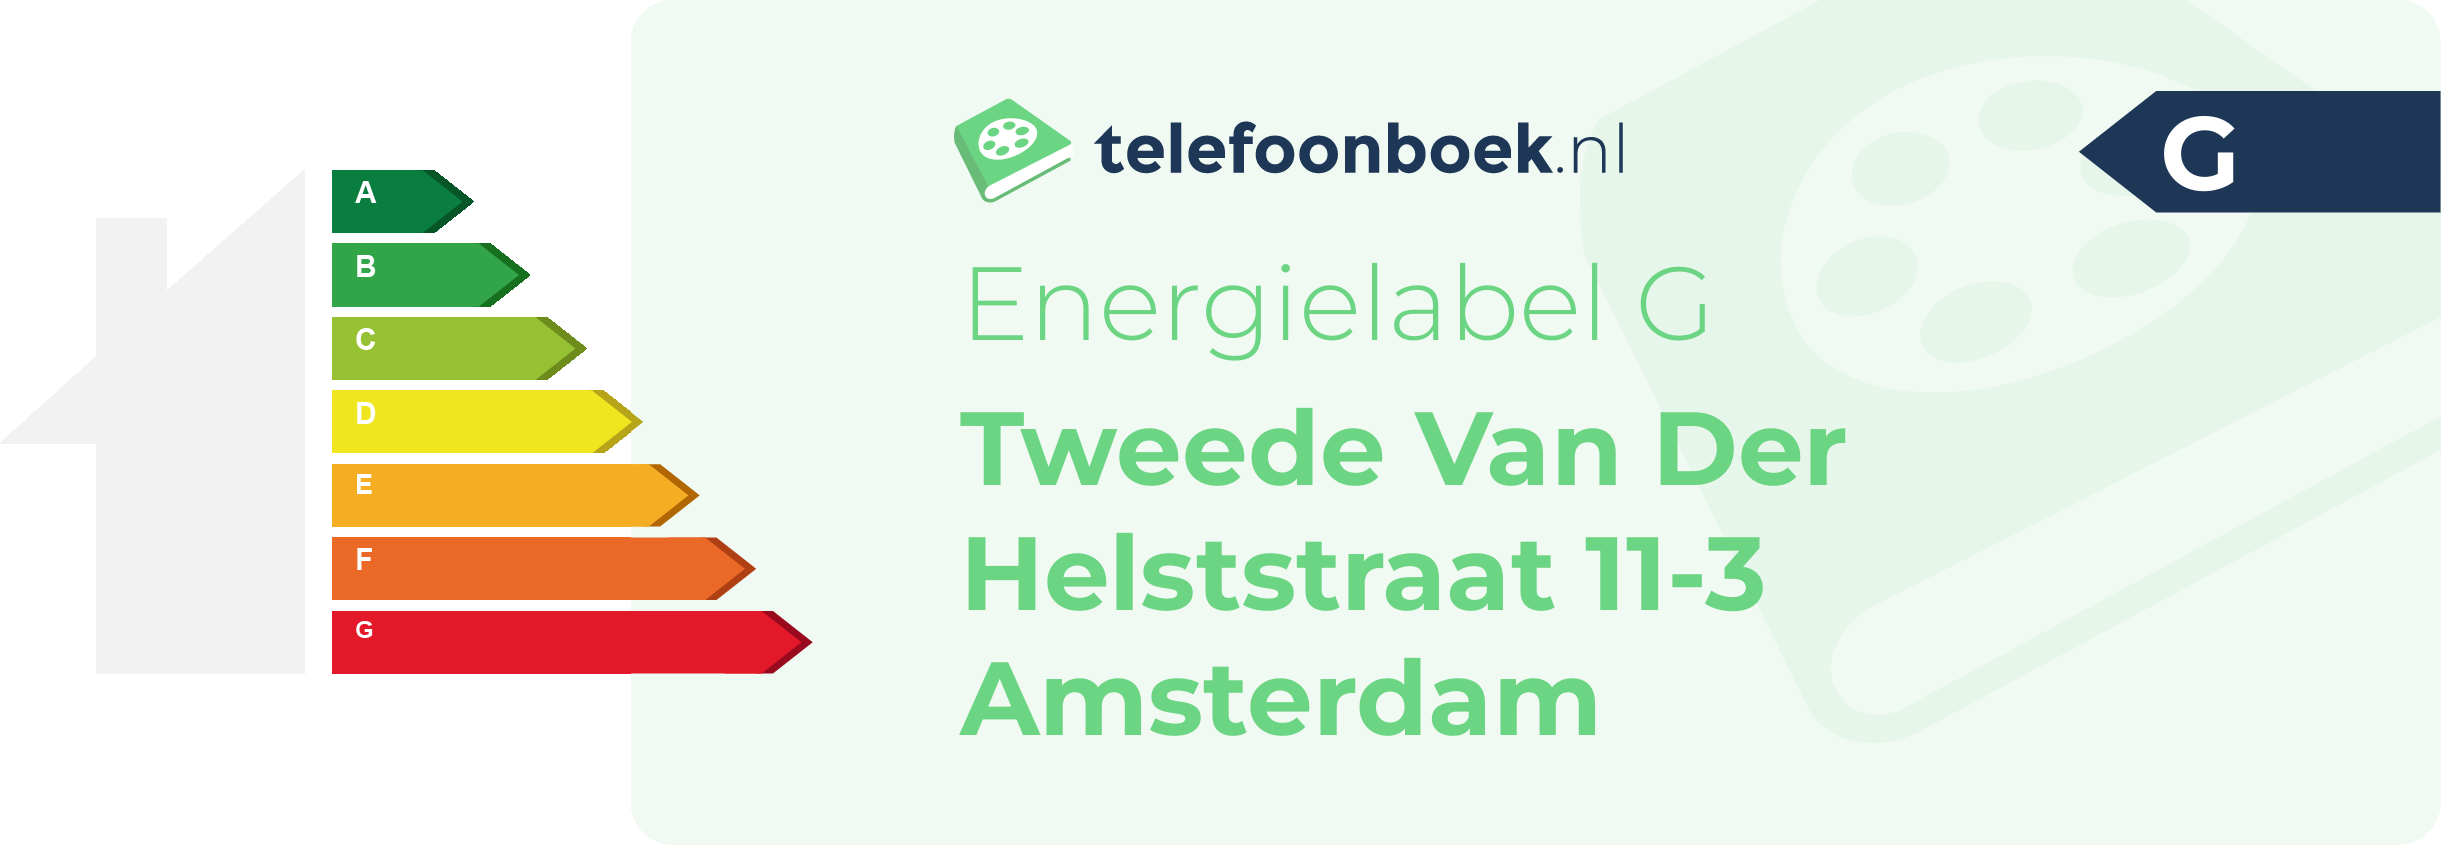 Energielabel Tweede Van Der Helststraat 11-3 Amsterdam